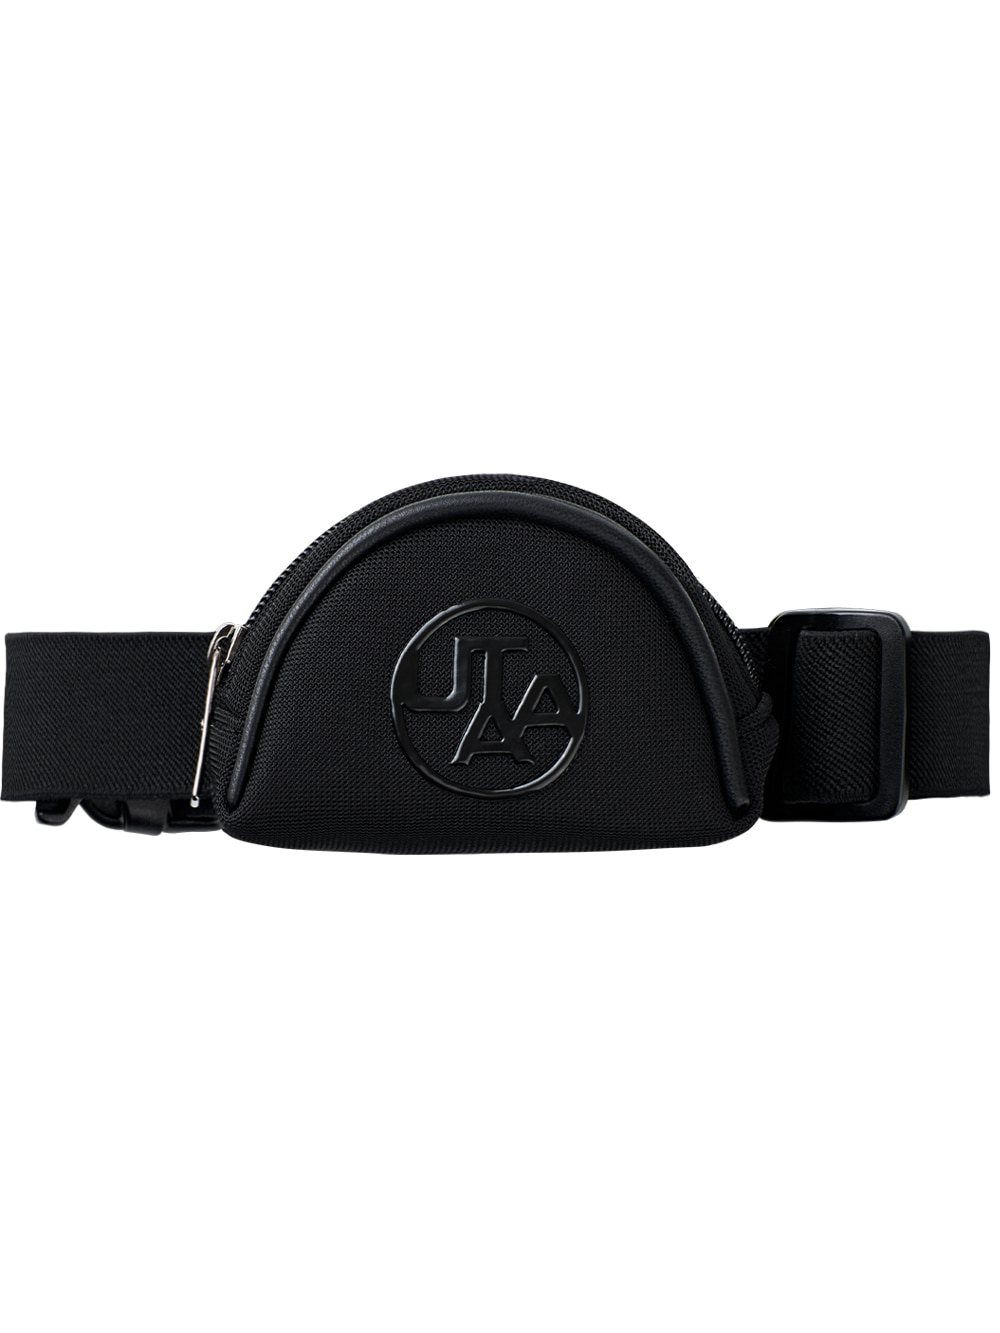 UTAA Pebble Cushion Belt Bag : Black (UD0GAF200BK)